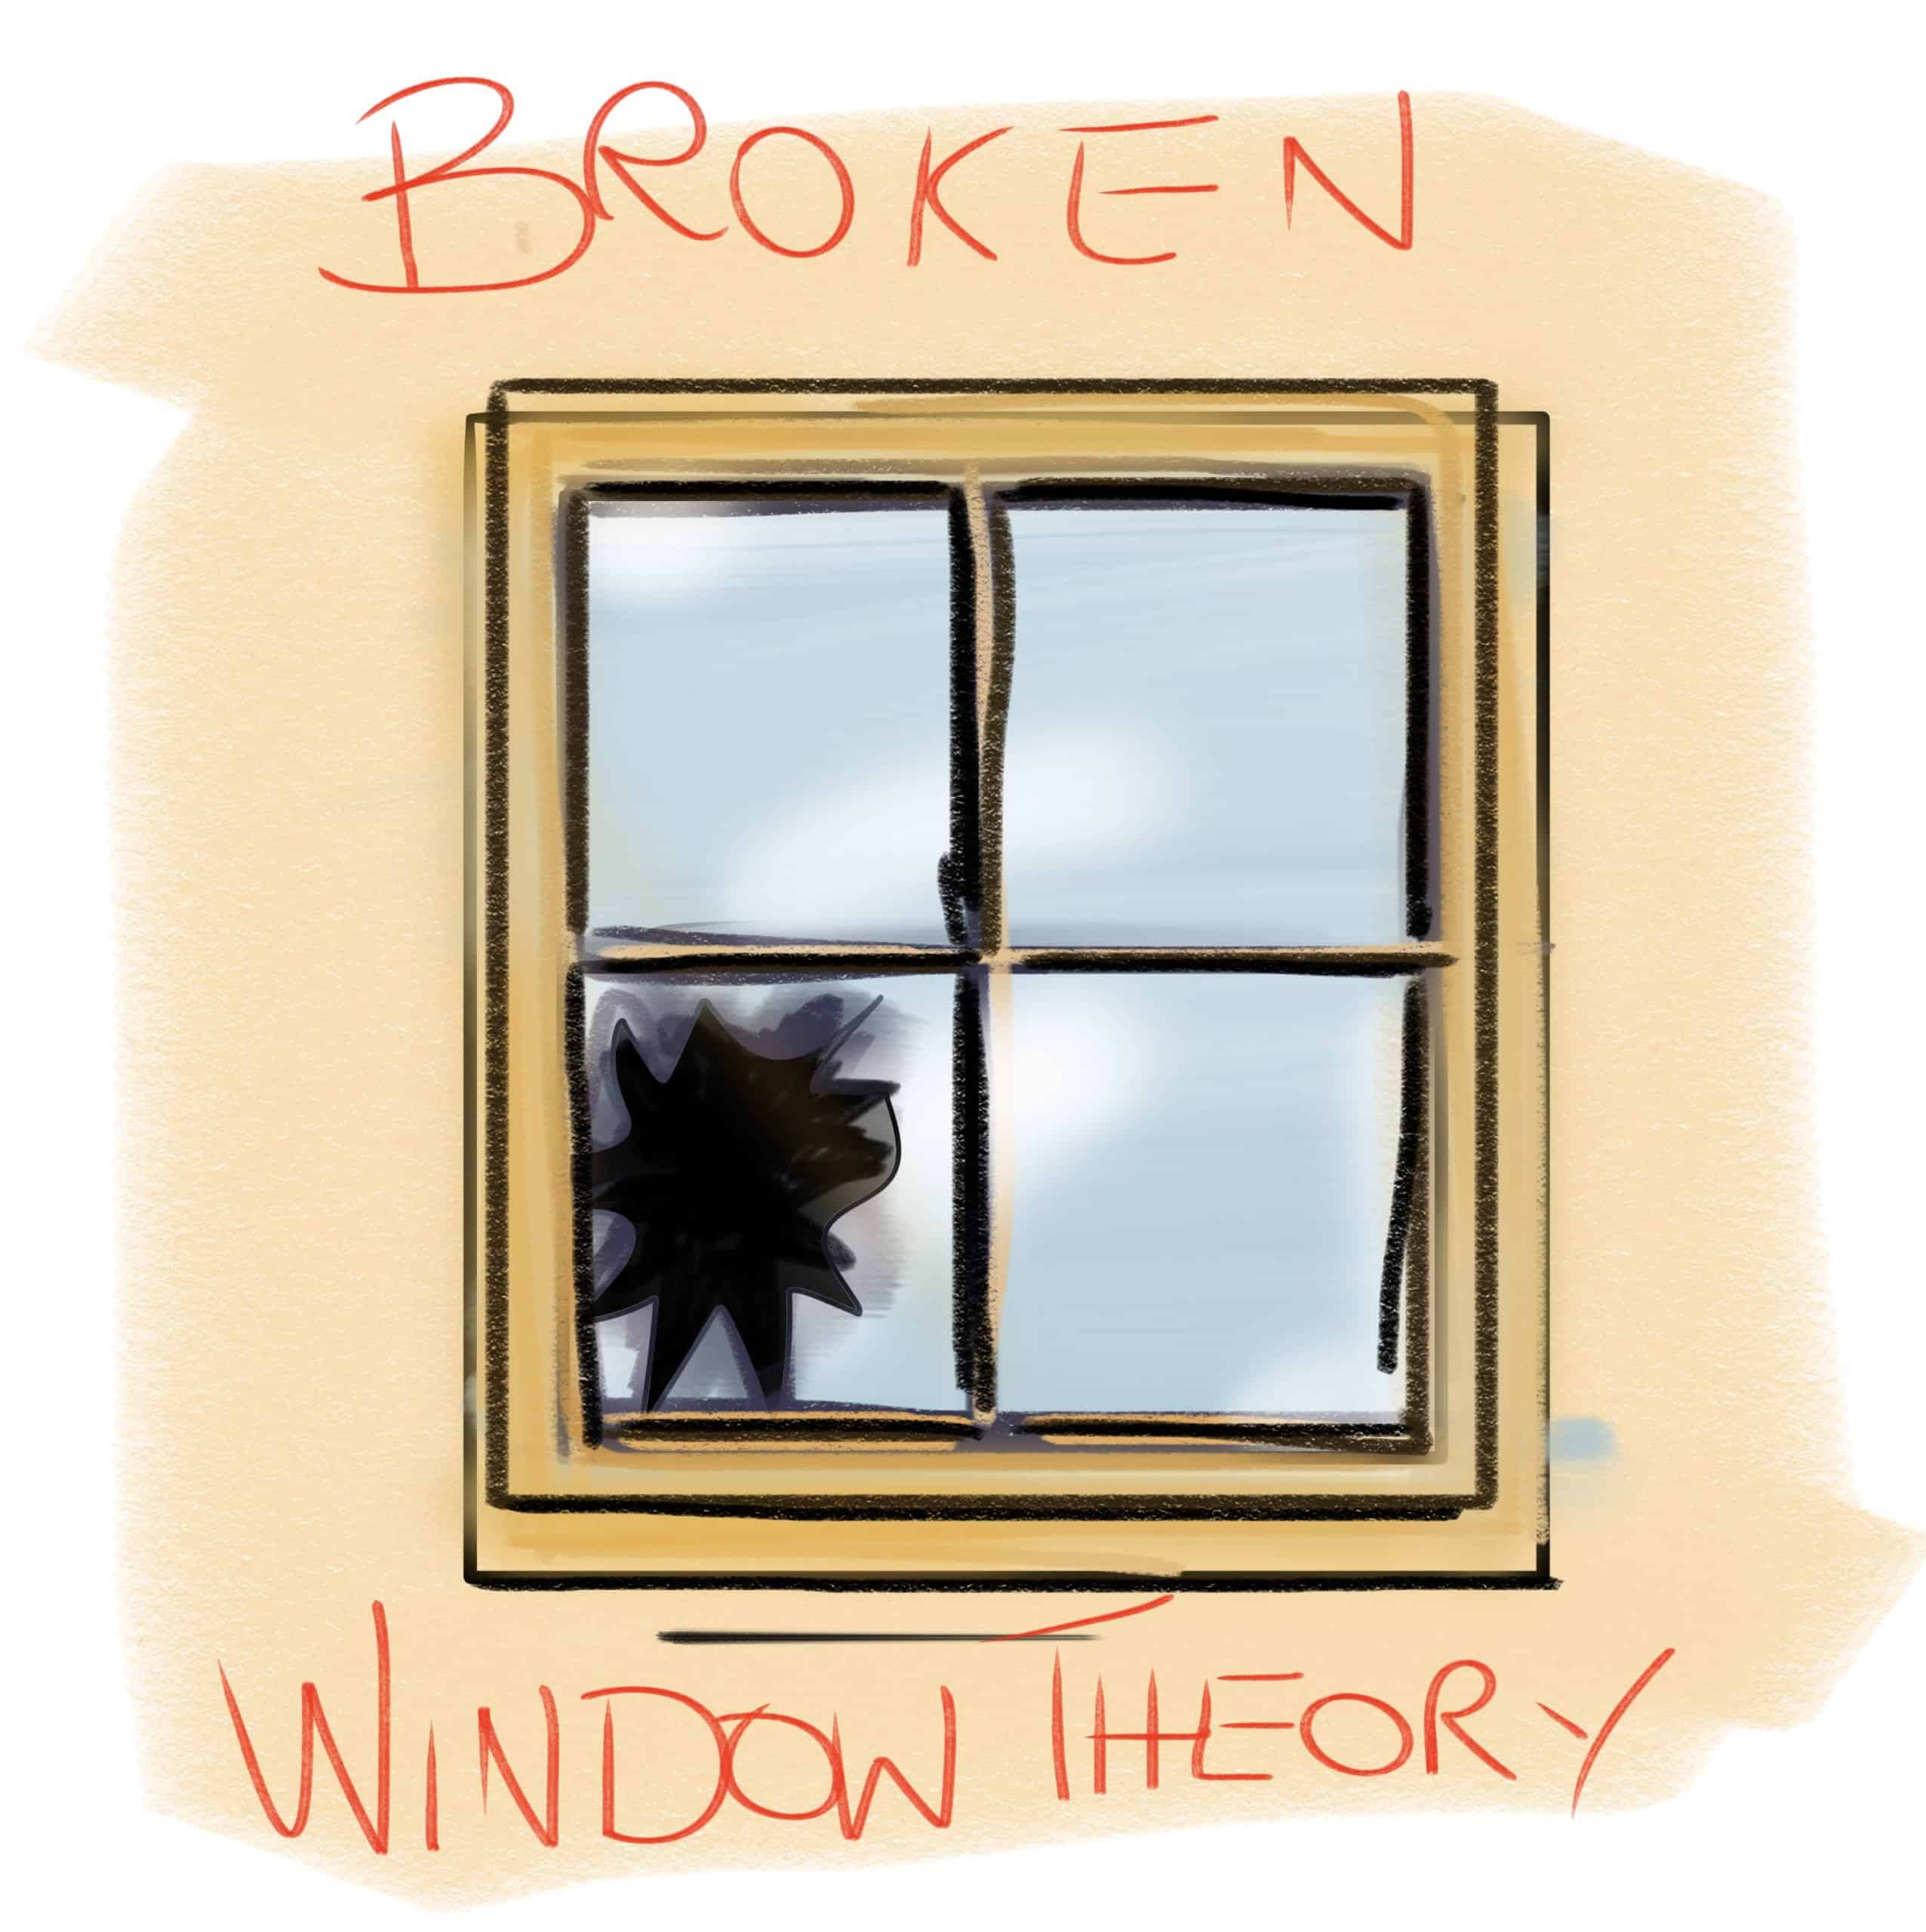 broken window theory good way